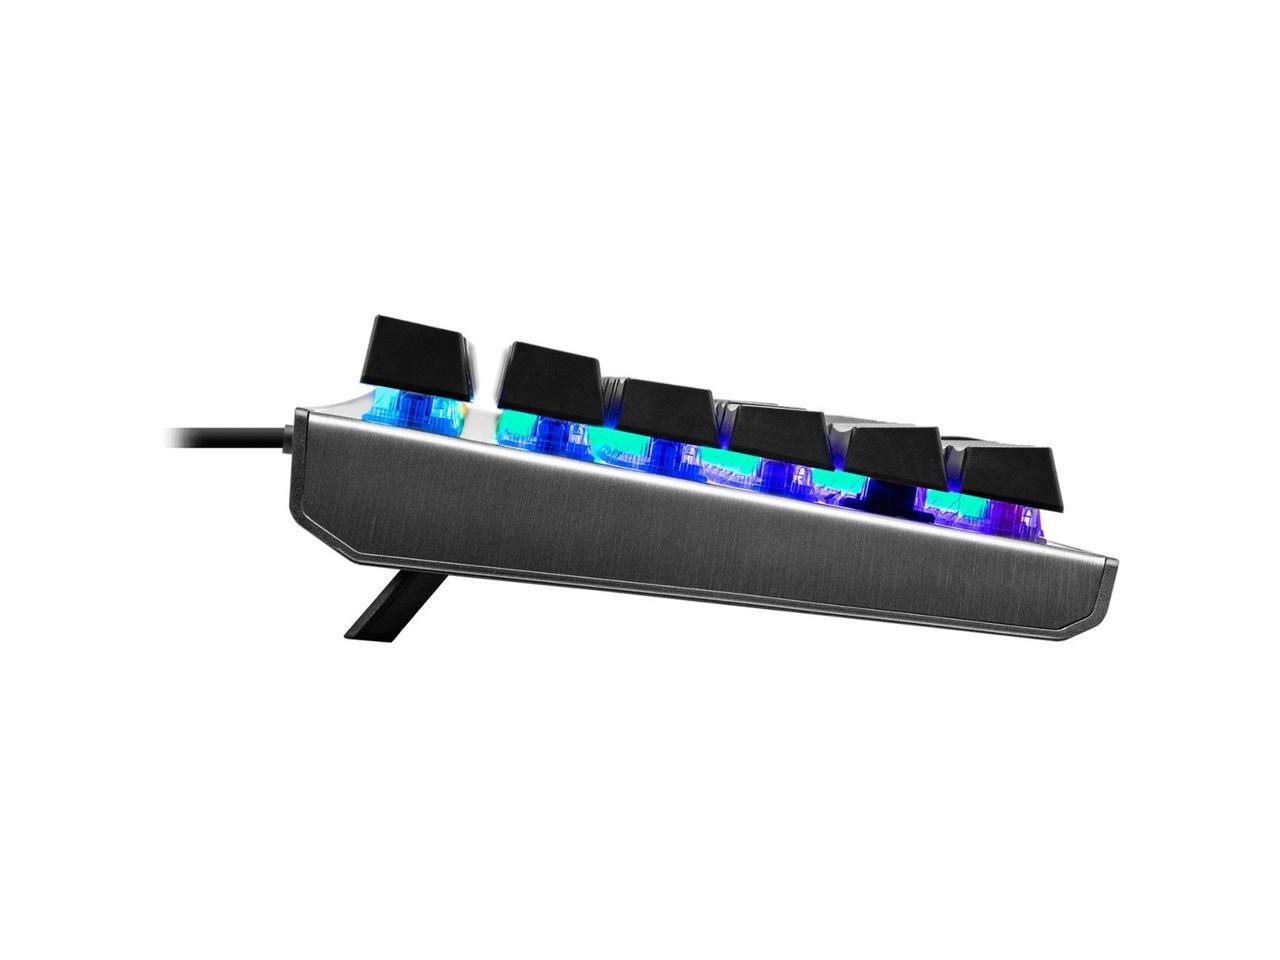 Cooler Master Ck-530-Gktl1-Us Usb Wired Gaming Keyboard W/ Blue Switch (Gunmetal Black)